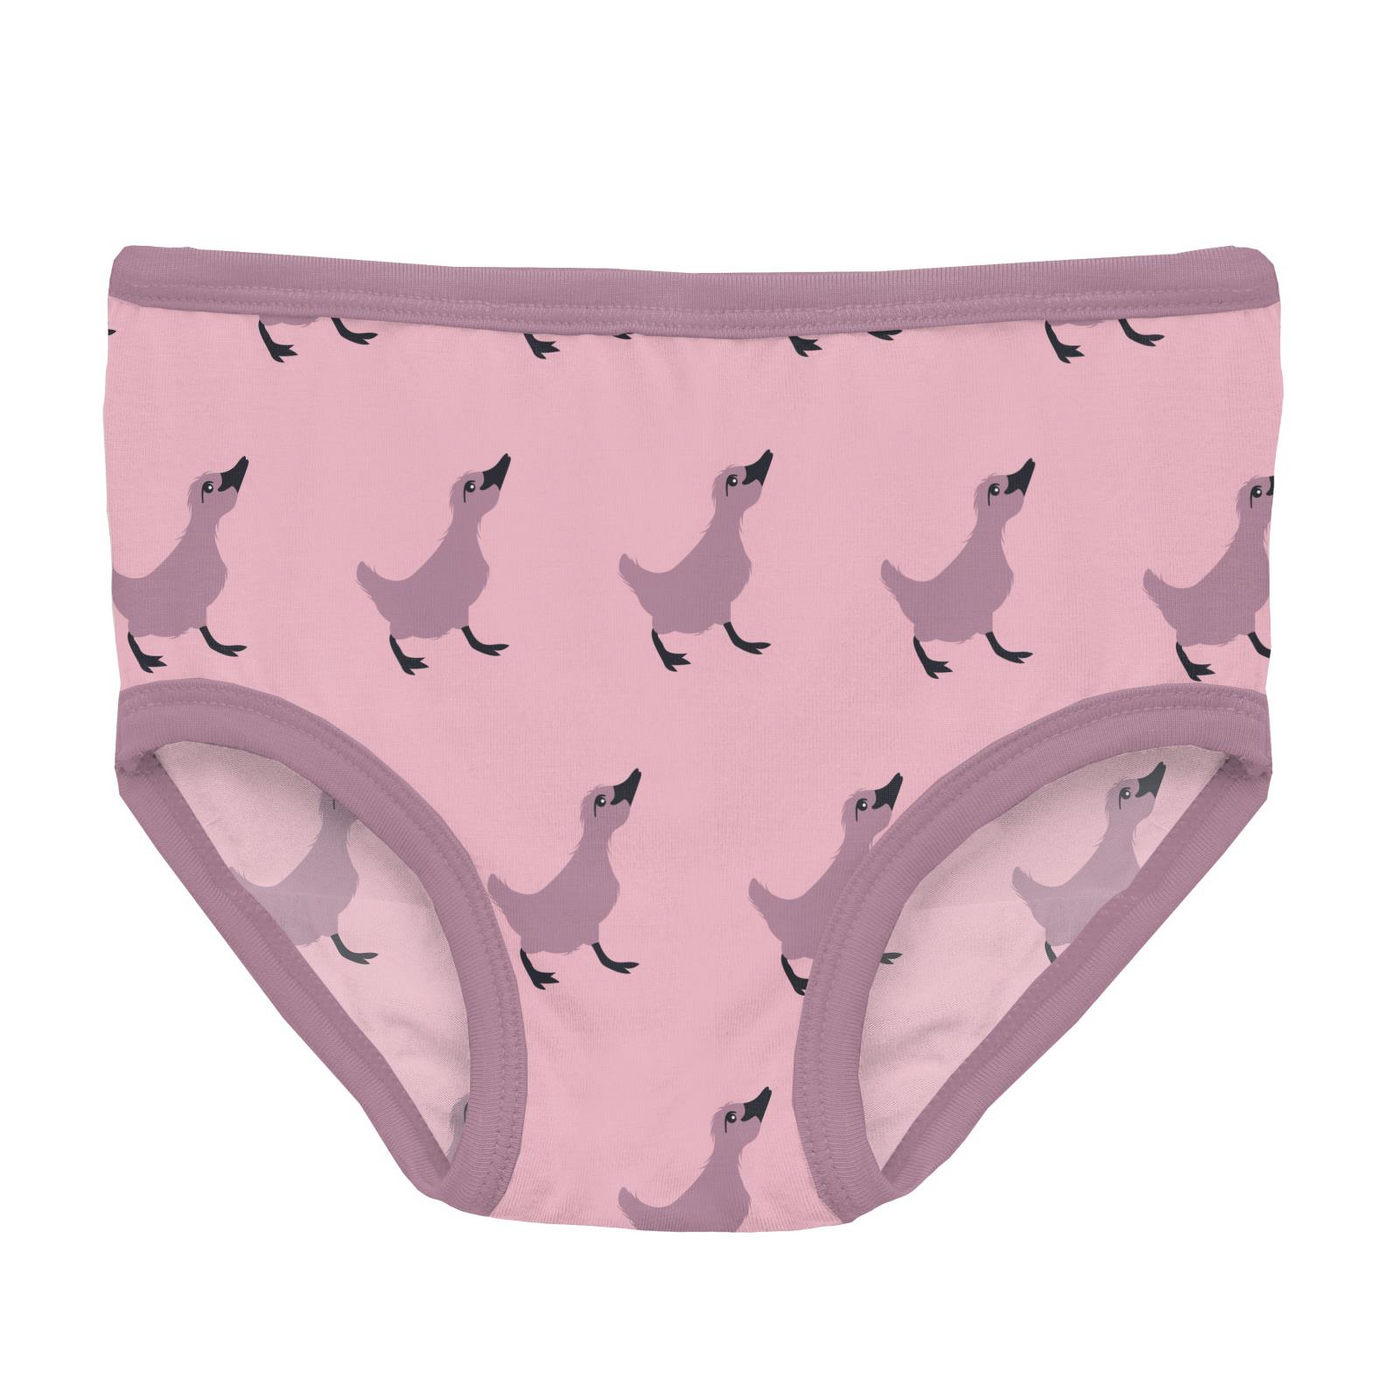 Kickee Pants Girl's Underwear: Cake Pop Ugly Duckling